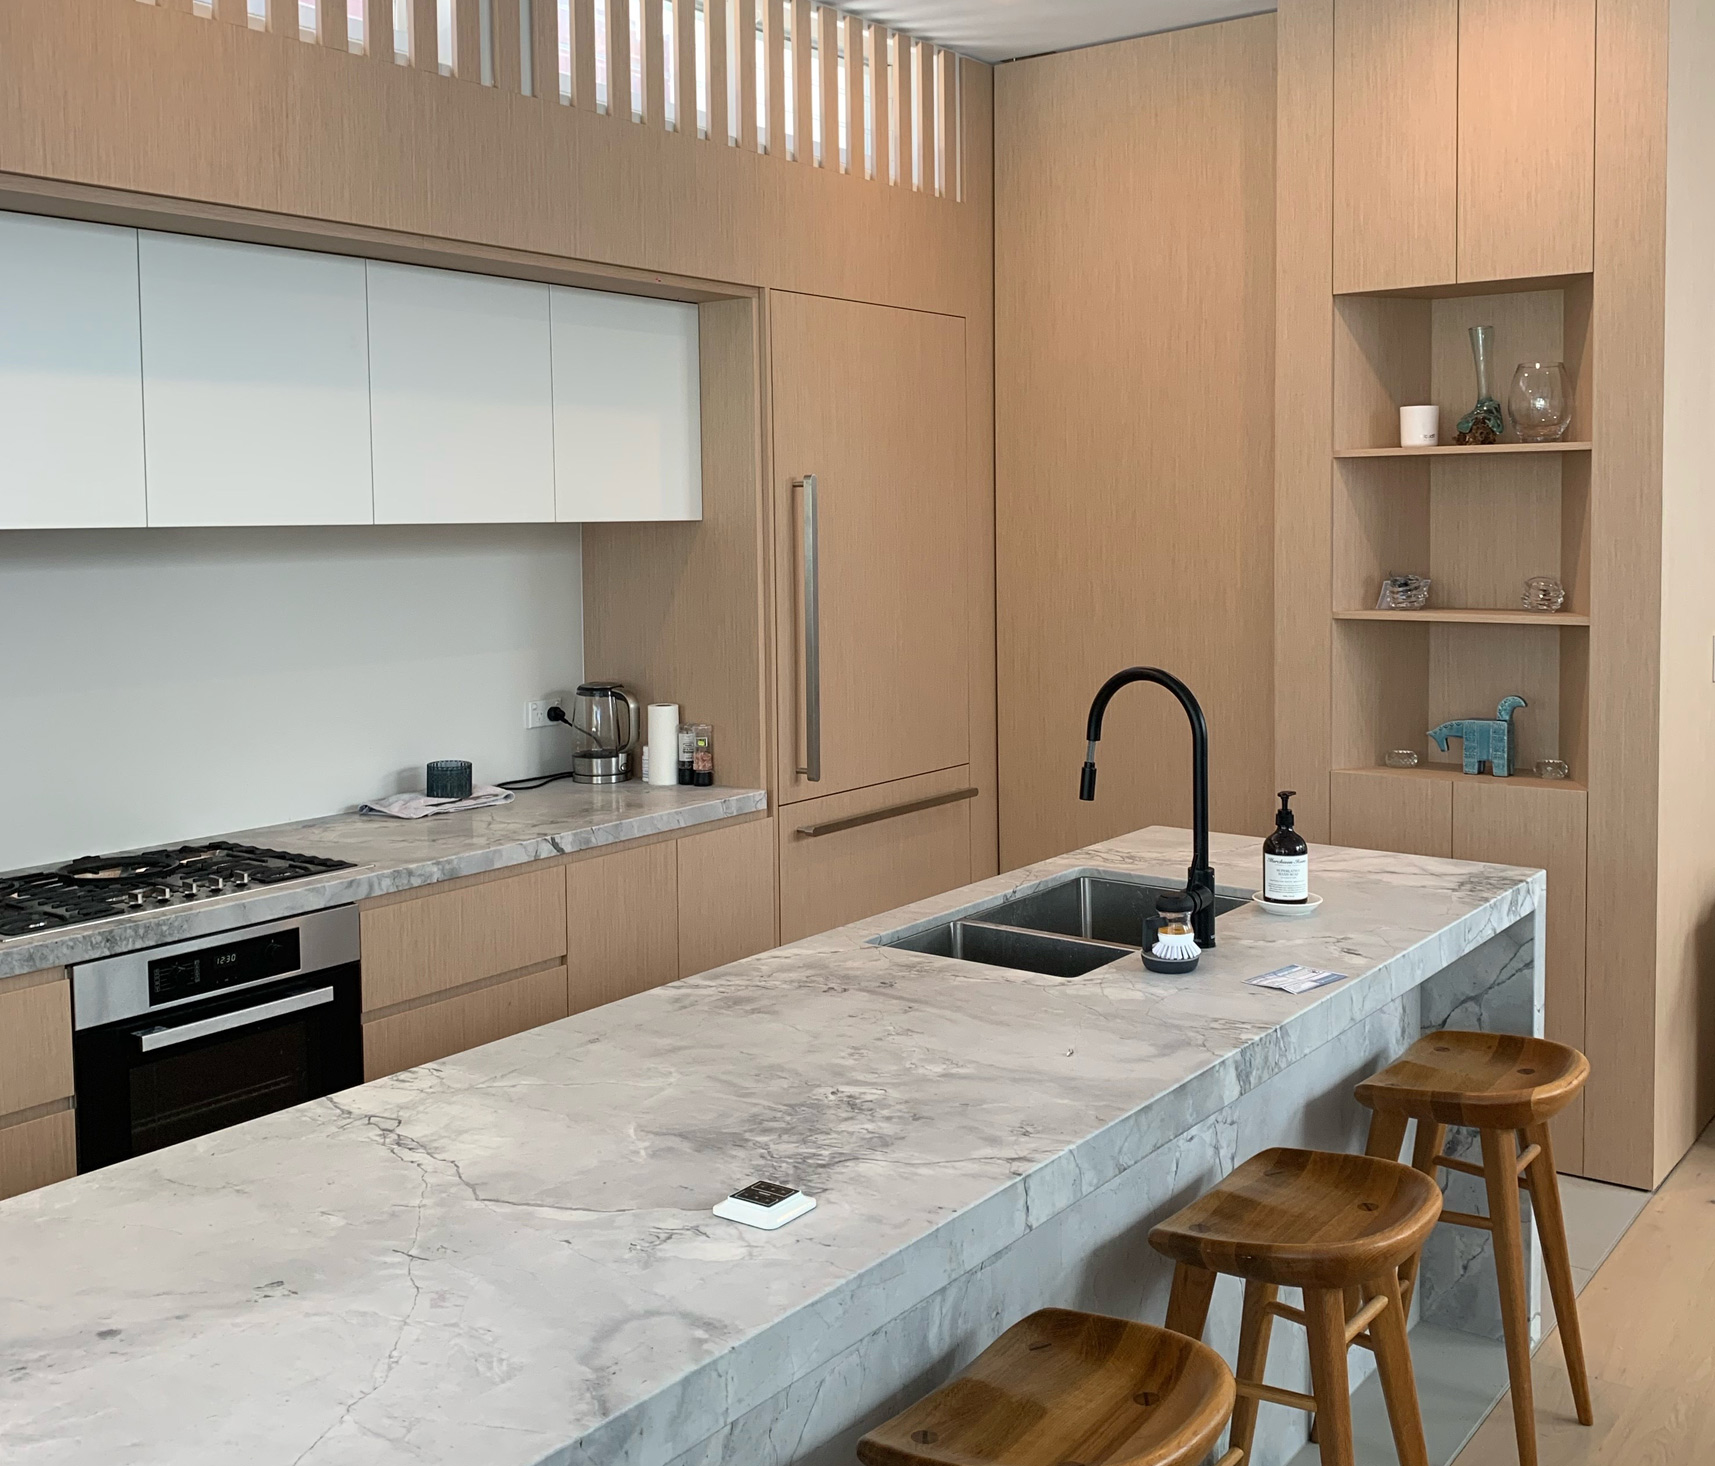 Quality custom built Bespoke kitchens